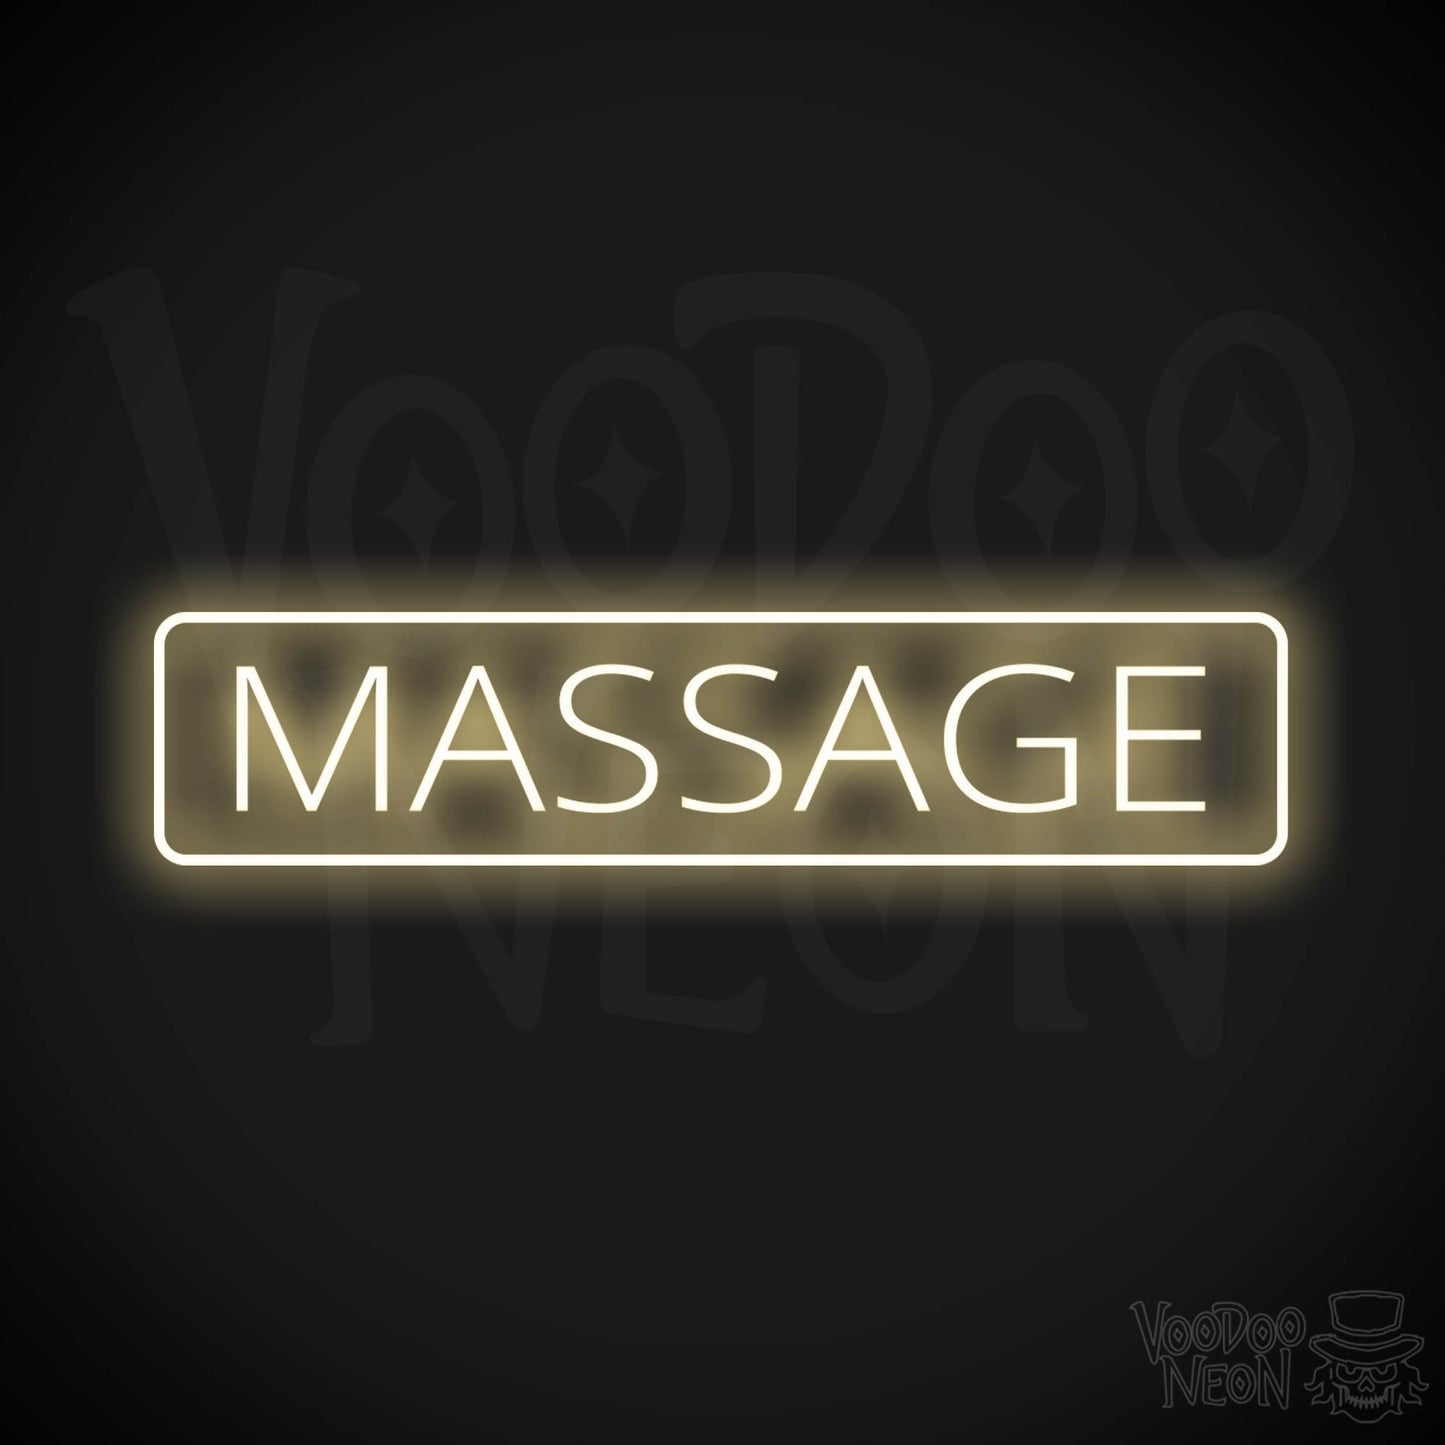 Massage Parlor LED Neon - Warm White